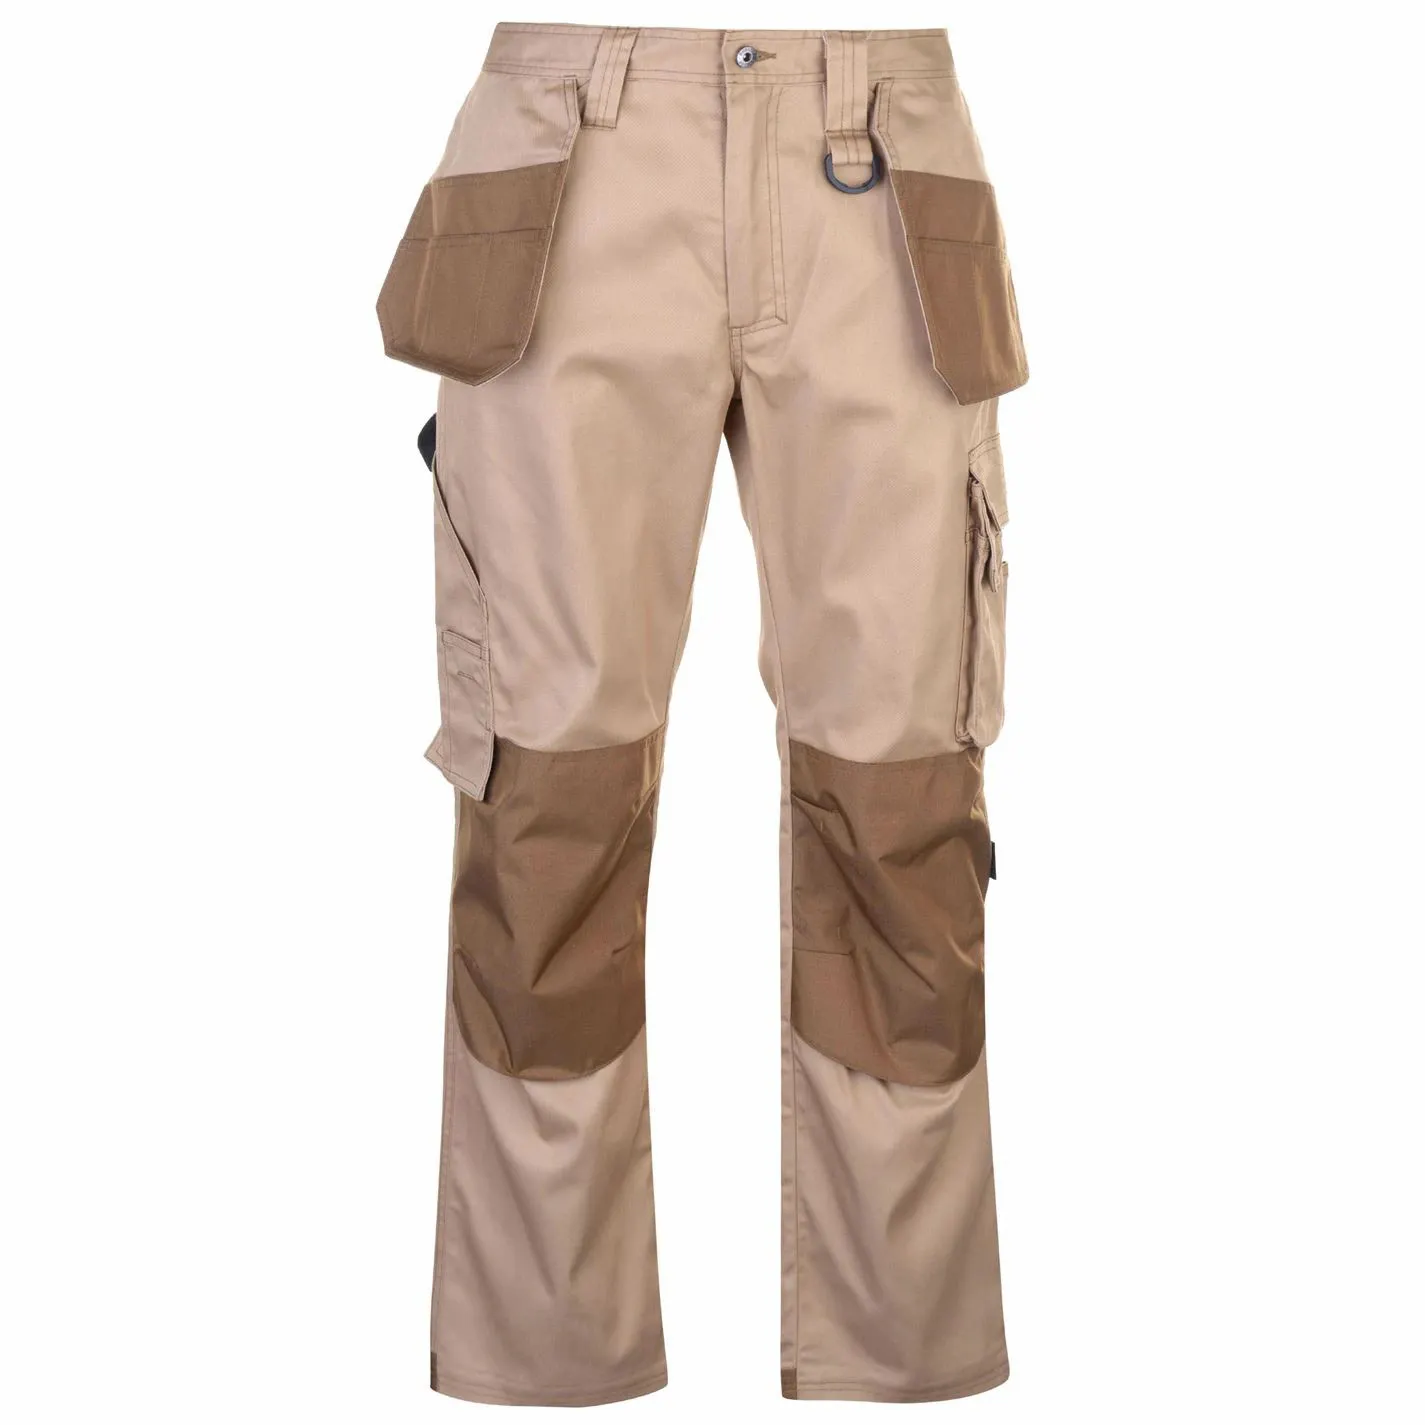 Wholesale custom's man's work cargo pants trousers tool pocket cargo Pants